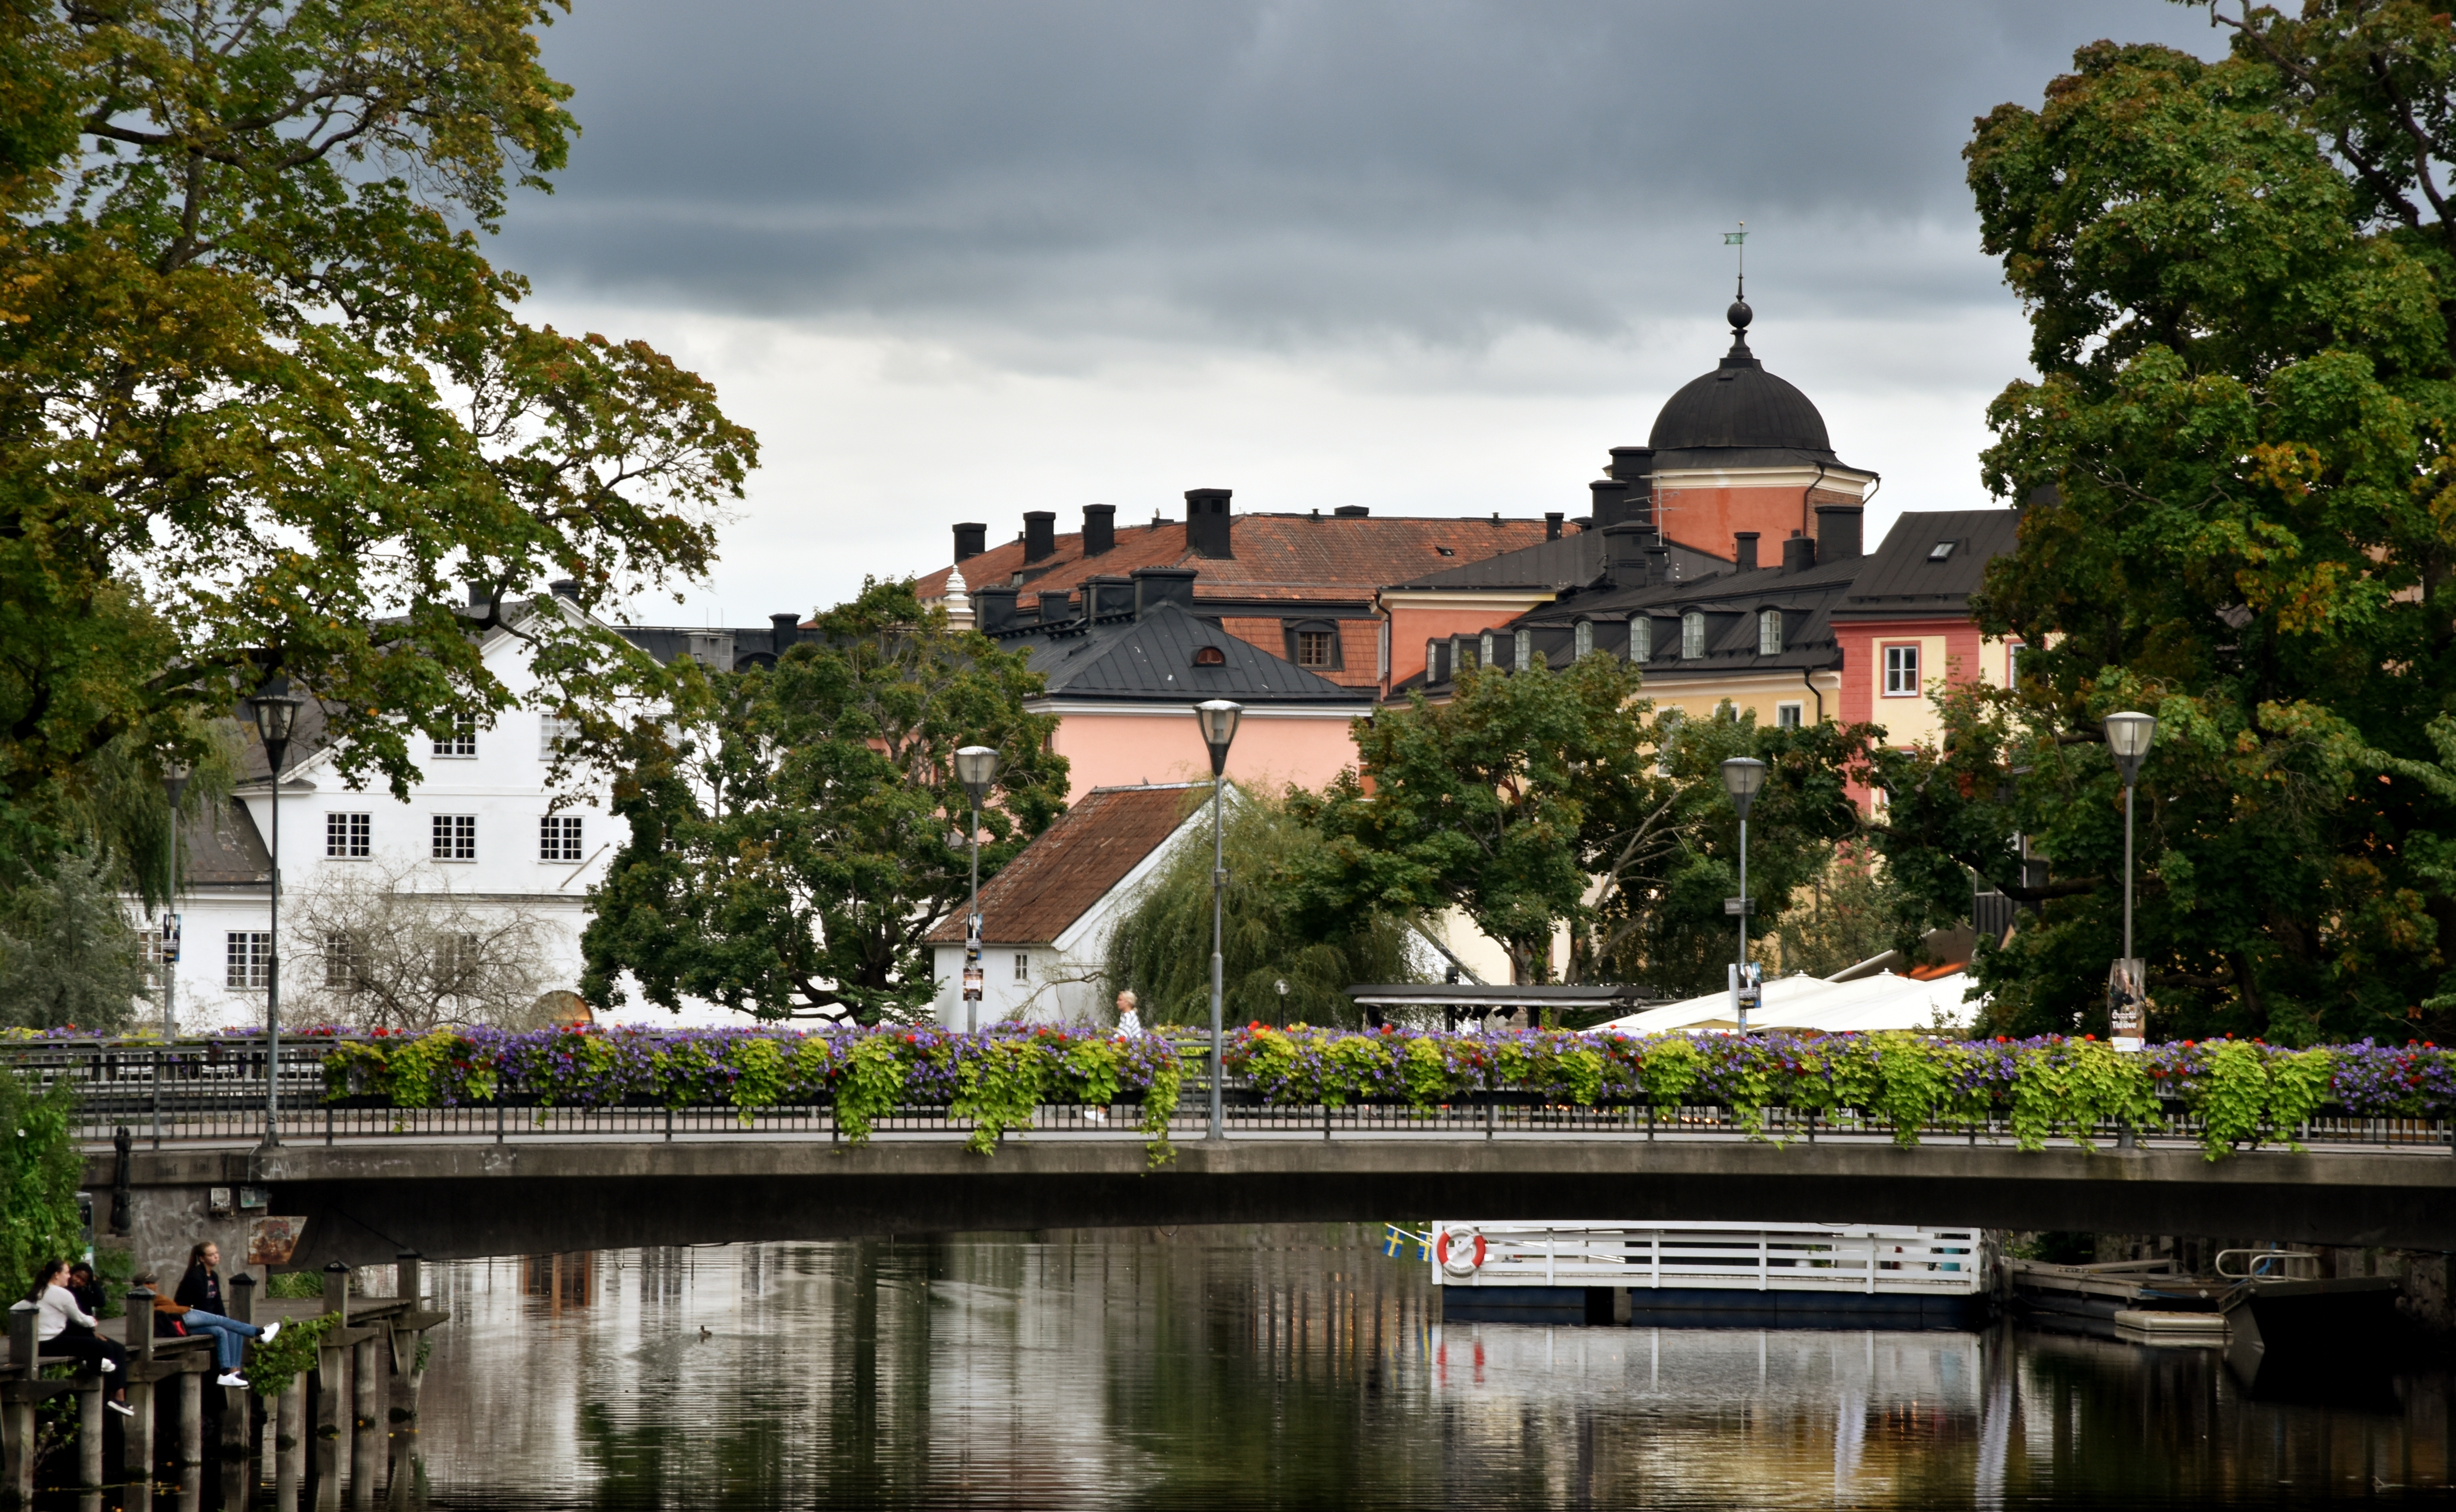 DSC_1880-the-place-Uppsala.jpg - The Furis river in Uppsala